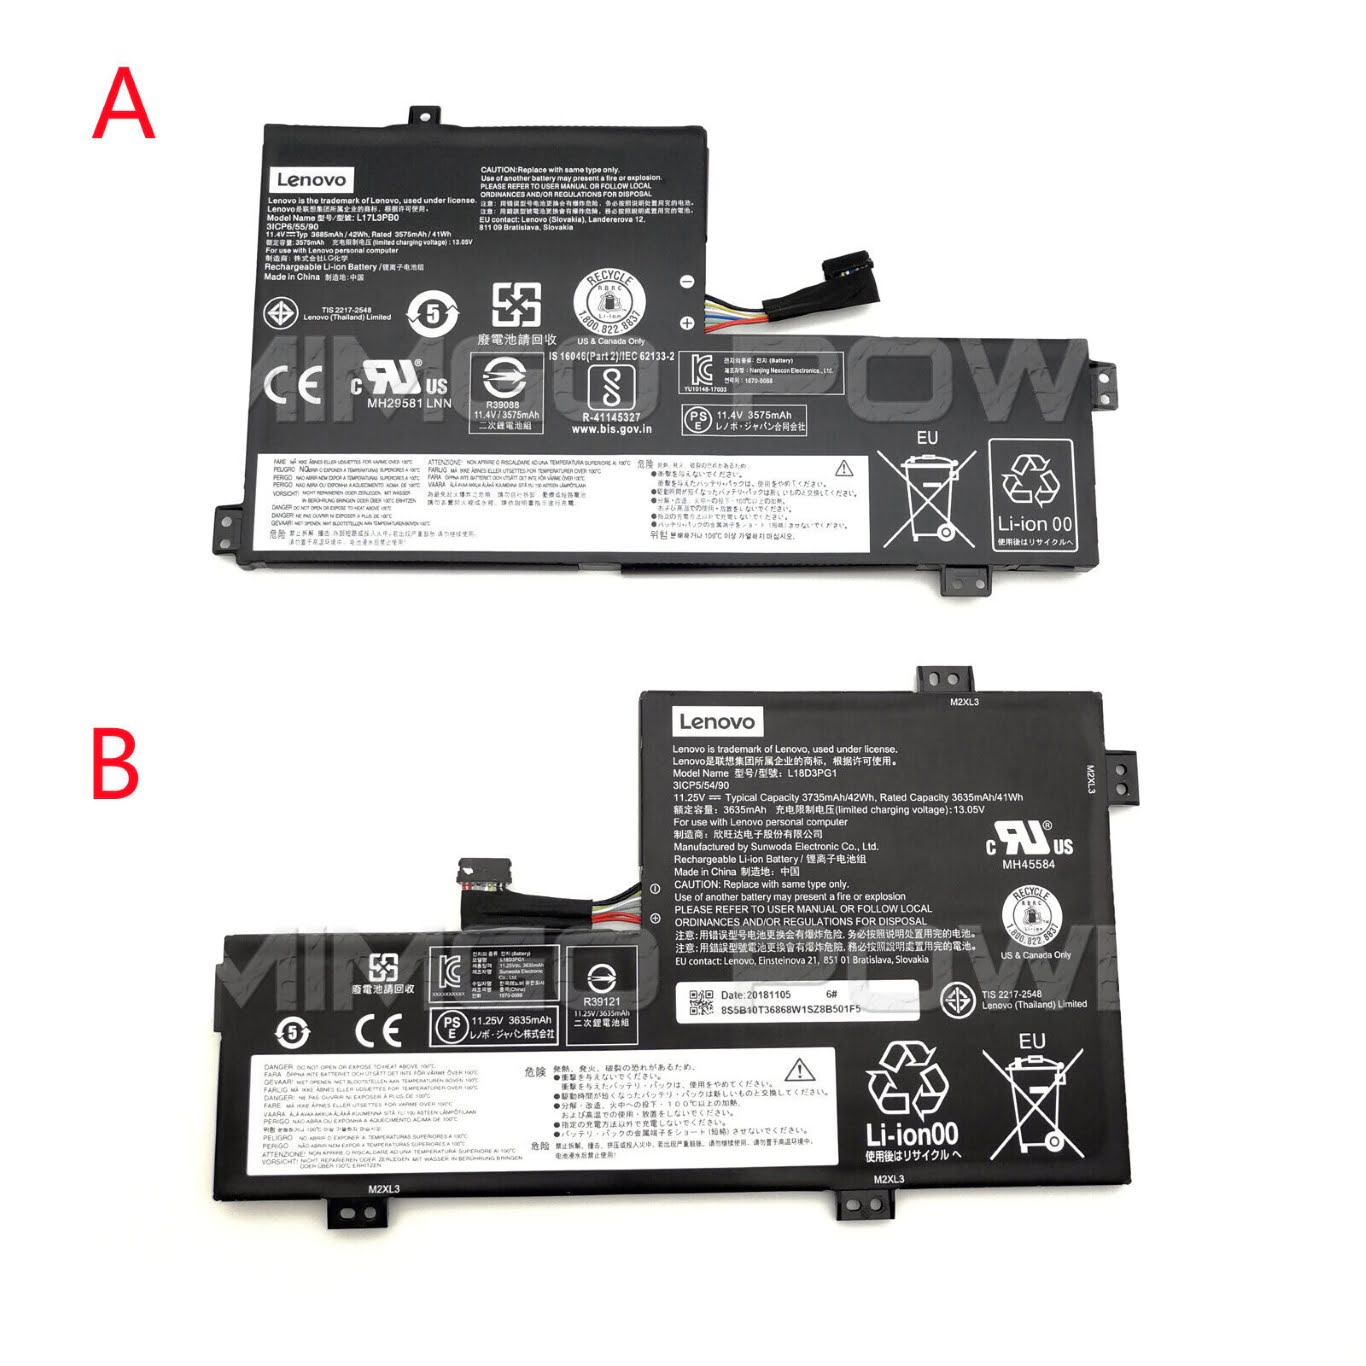 L17C3PG0, L17L3PG0 ersatz Laptop Akku fuer Lenovo Chromebook 100E 1st Gen Series, Chromebook 100E 2nd Gen Series, 11,25v / 11,4v, 42wh, 3 zellen